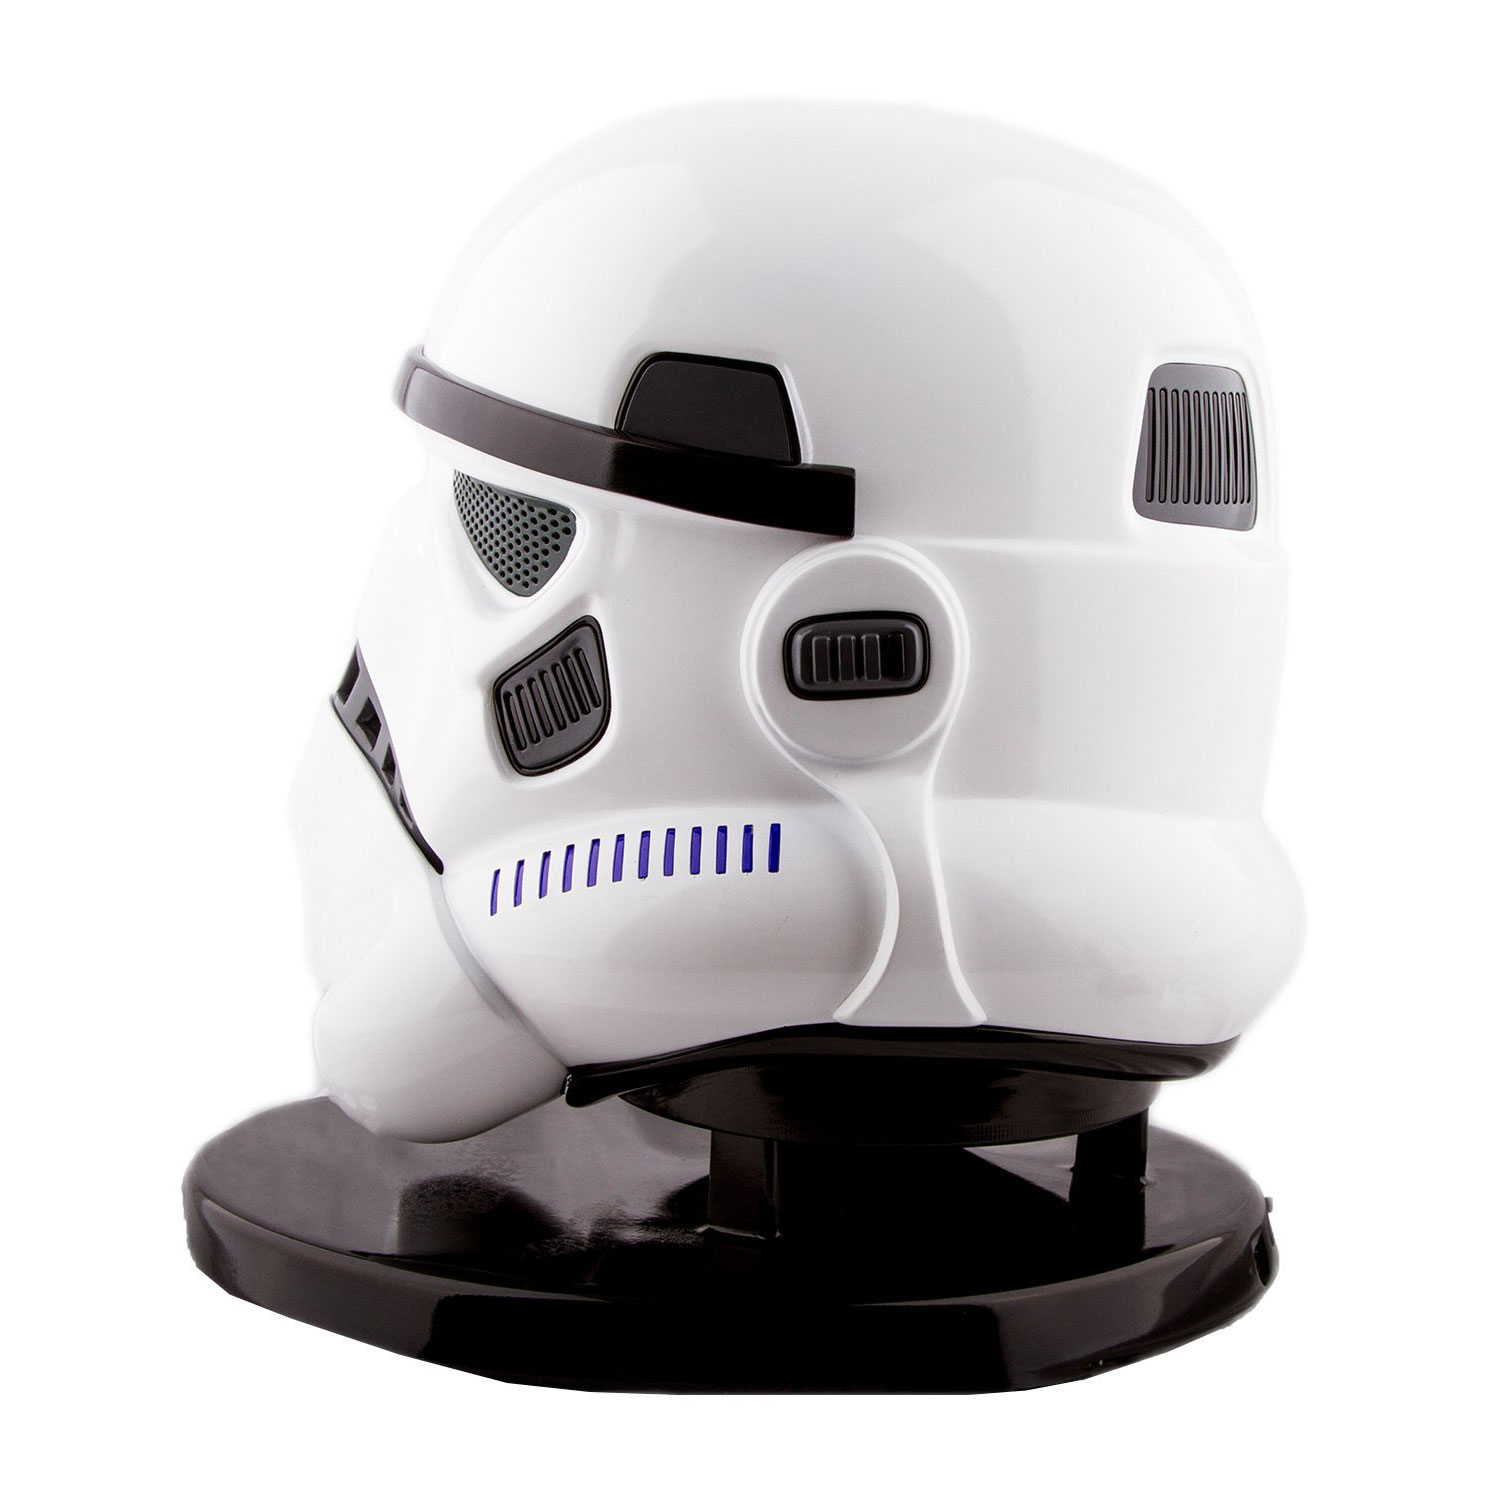 Official Star Wars Stormtrooper Head Bluetooth Speaker